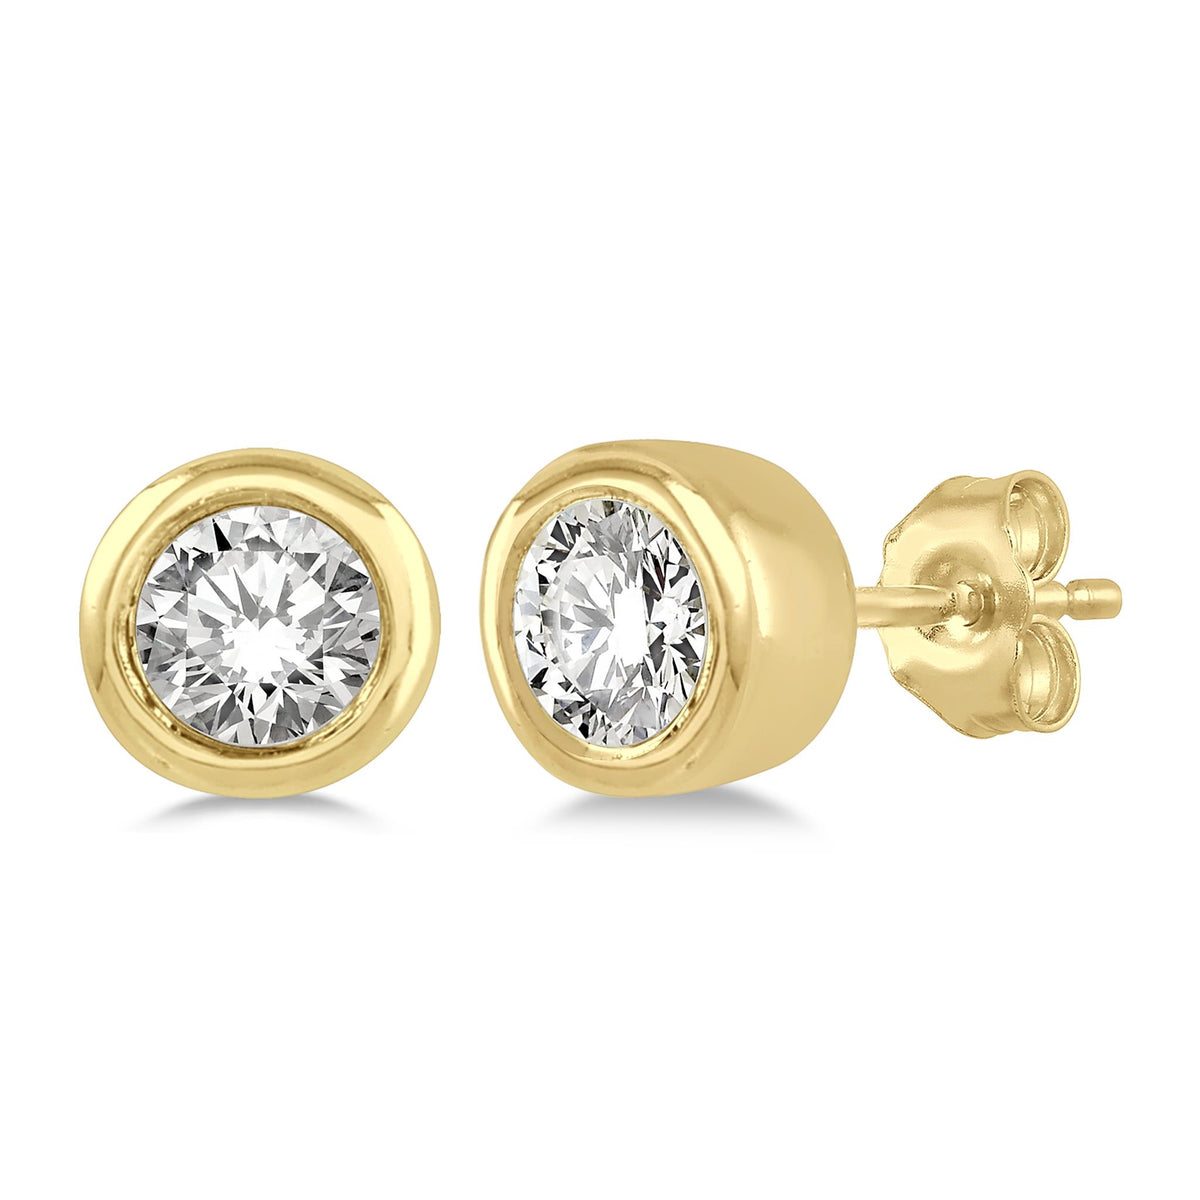 Lasker Petites-10Kt Yellow Gold Bezel Set Stud Earrings with 0.10cttw Natural Diamonds